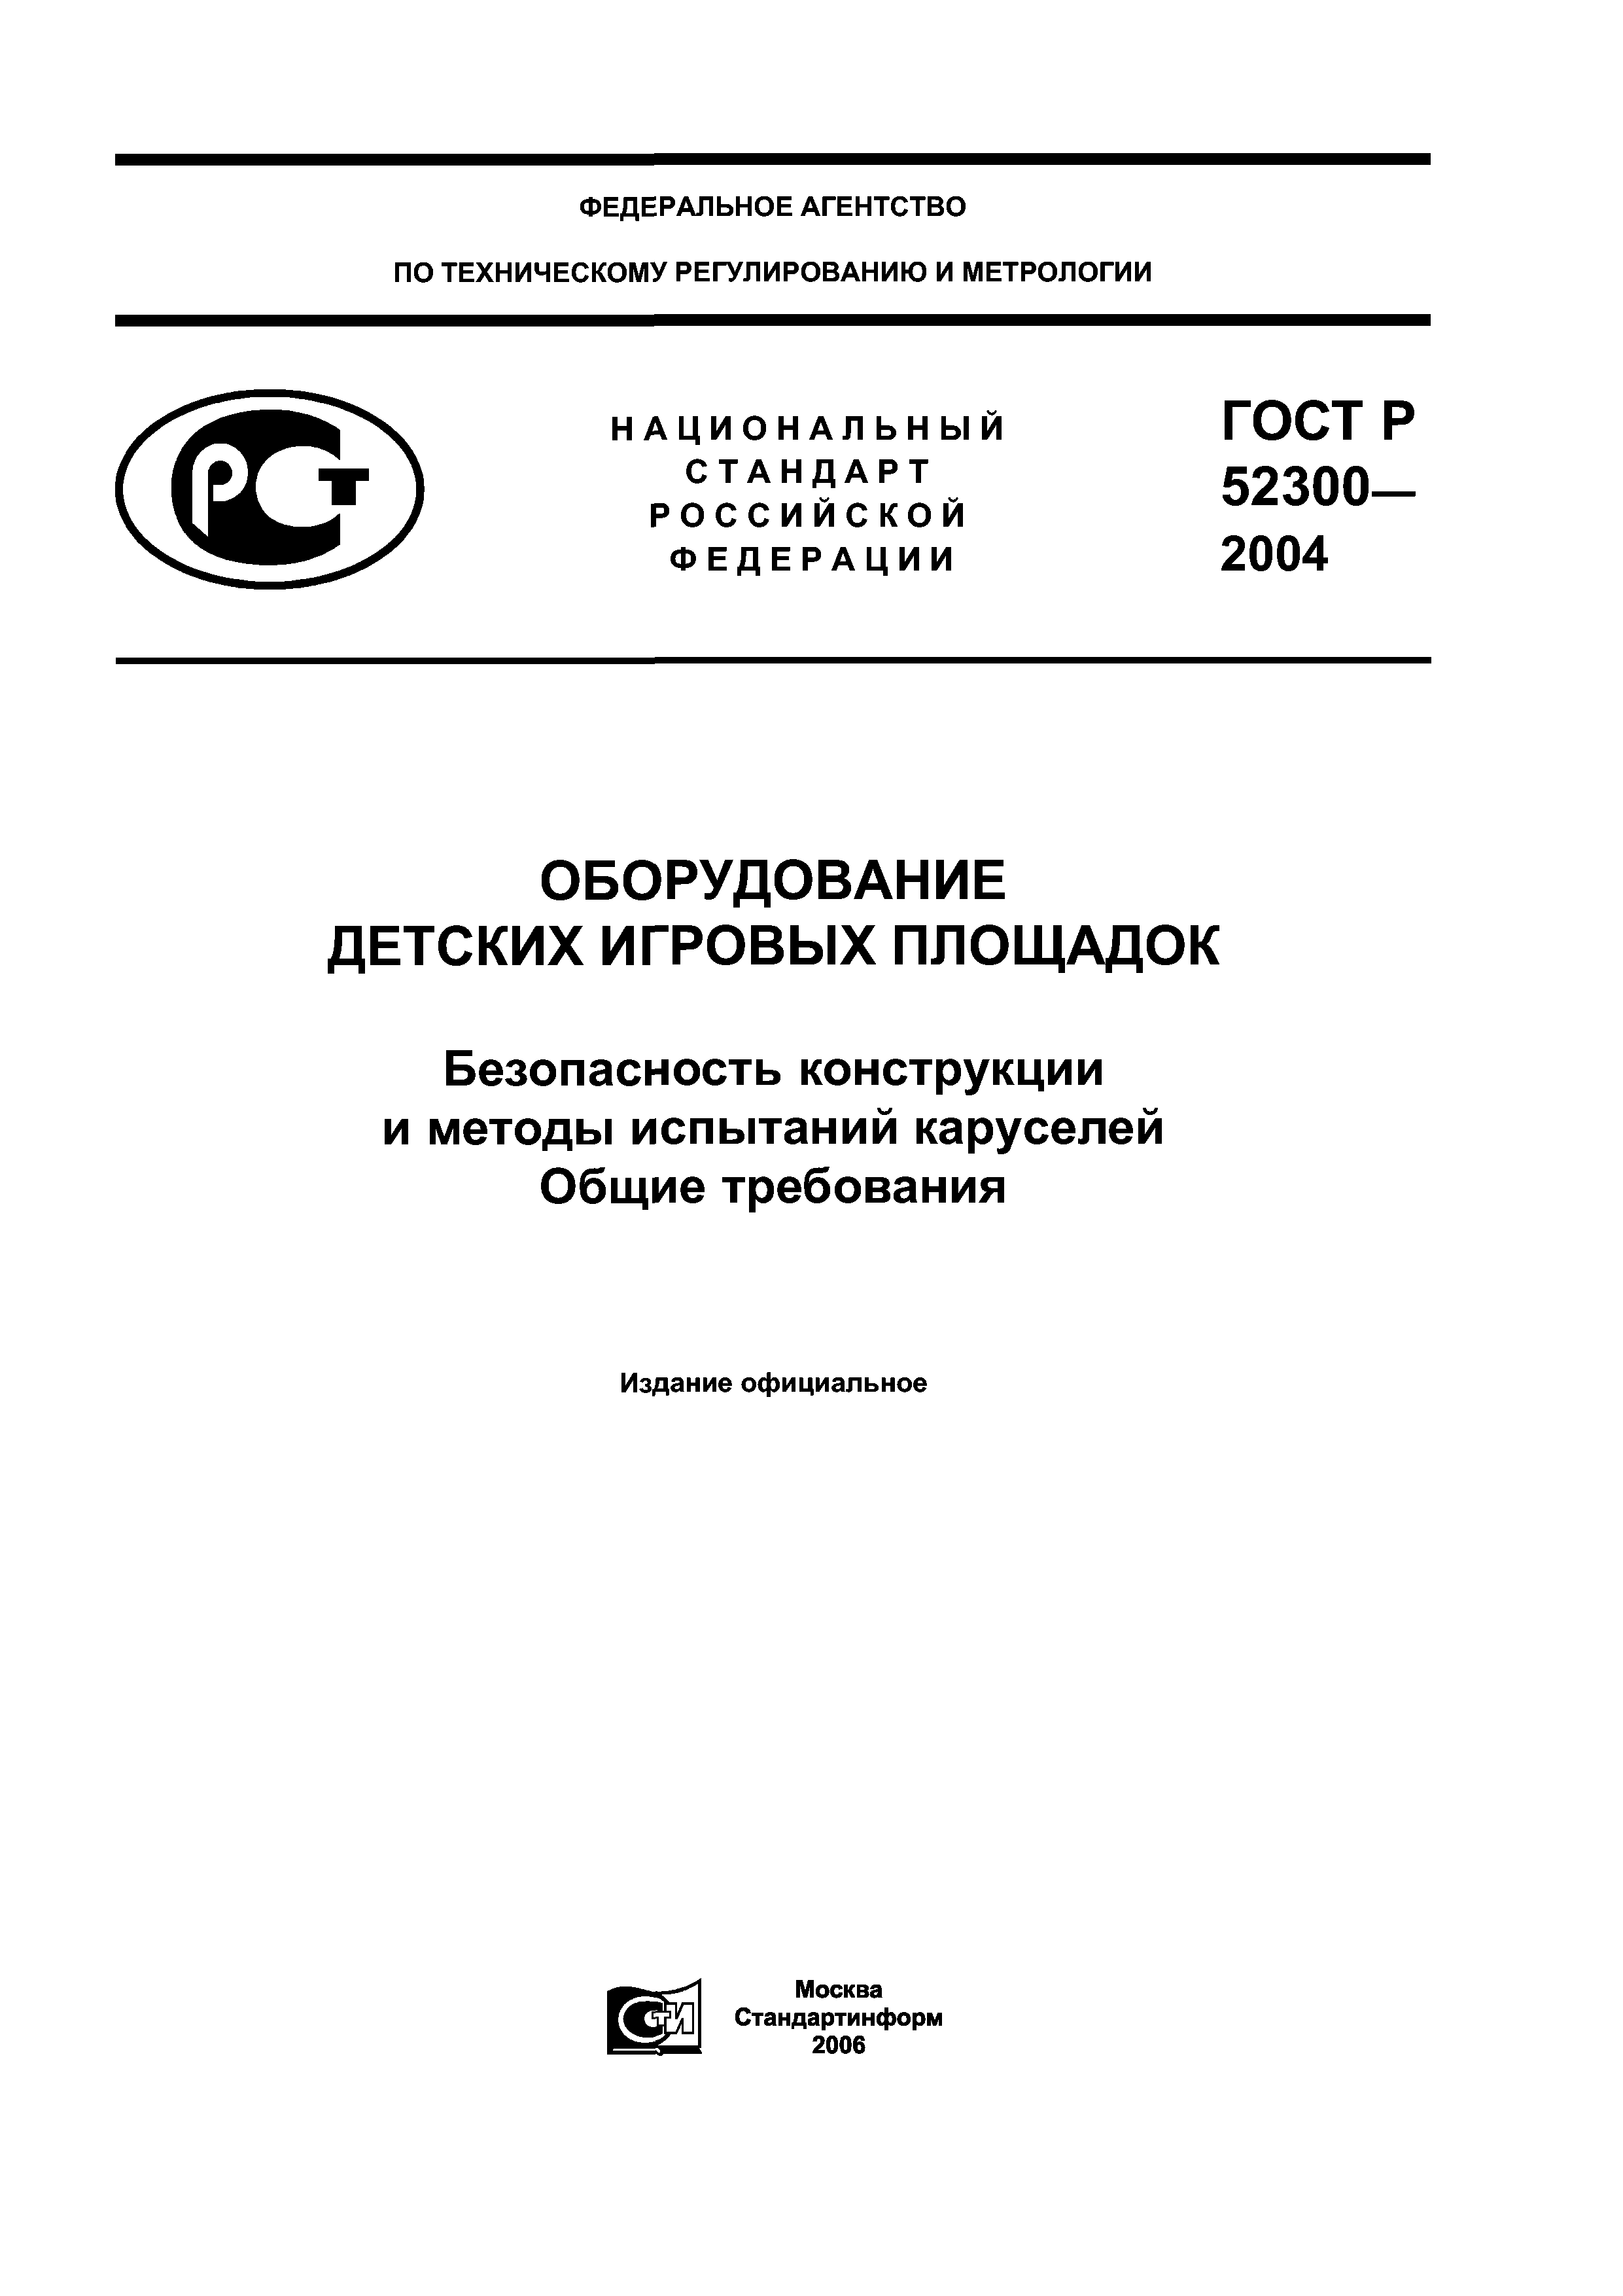 ГОСТ Р 52300-2004